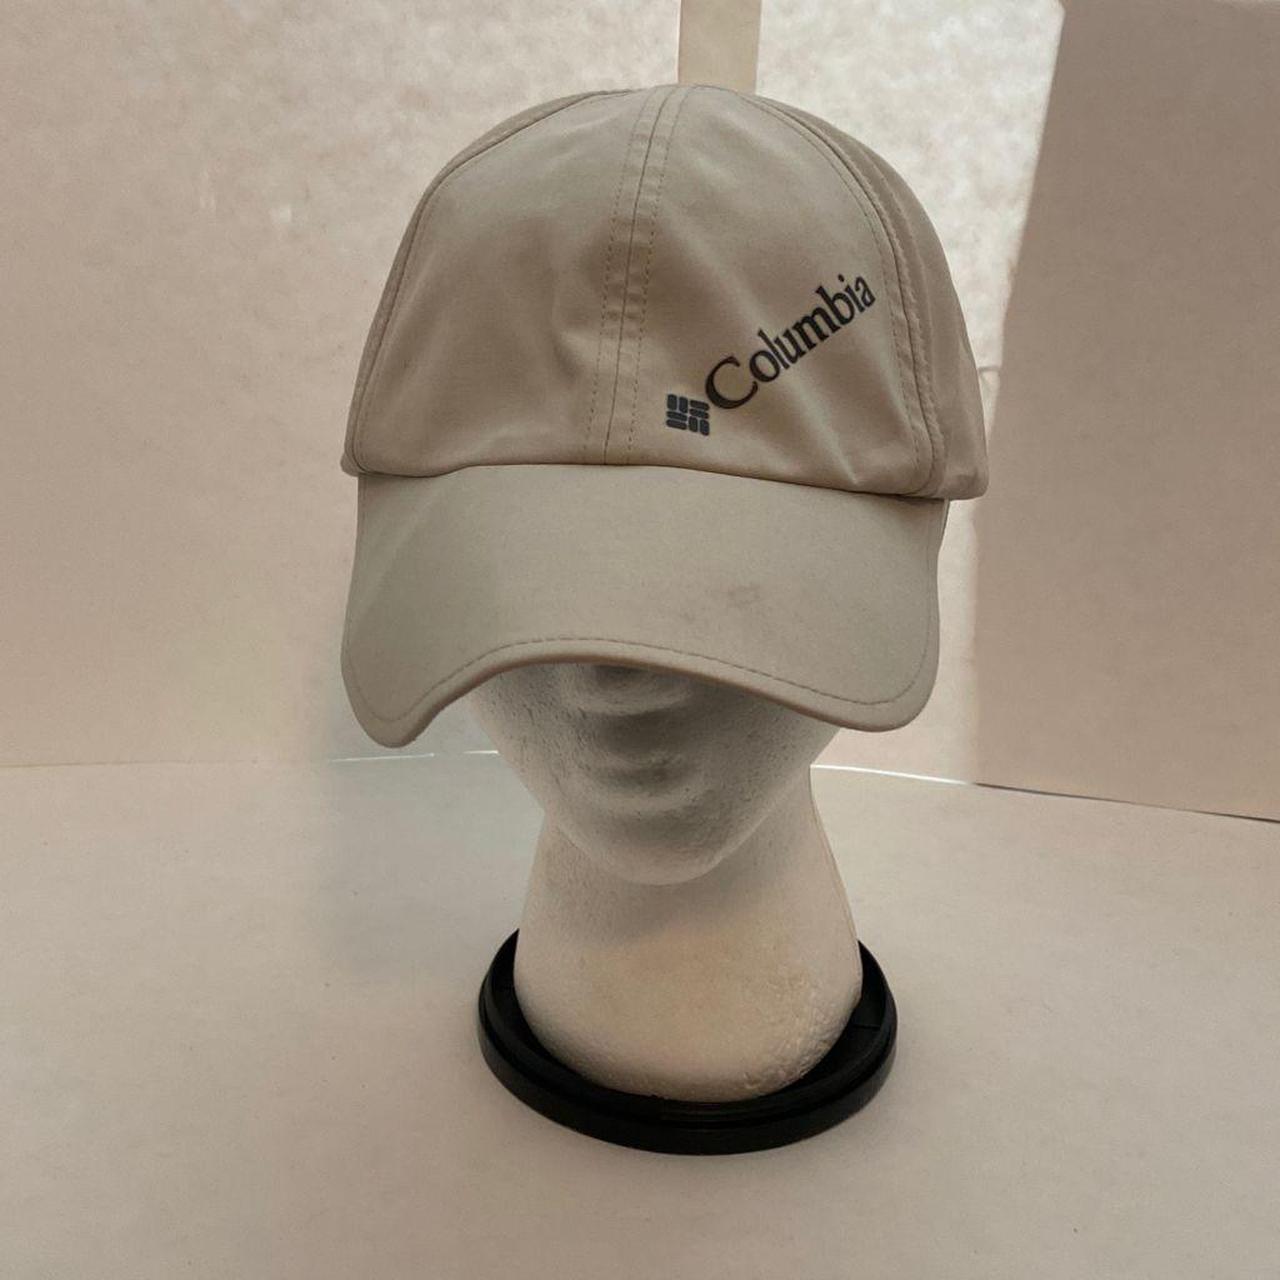 New Columbia Sportswear Tan Fishing Adjustable Baseball Cap Hat